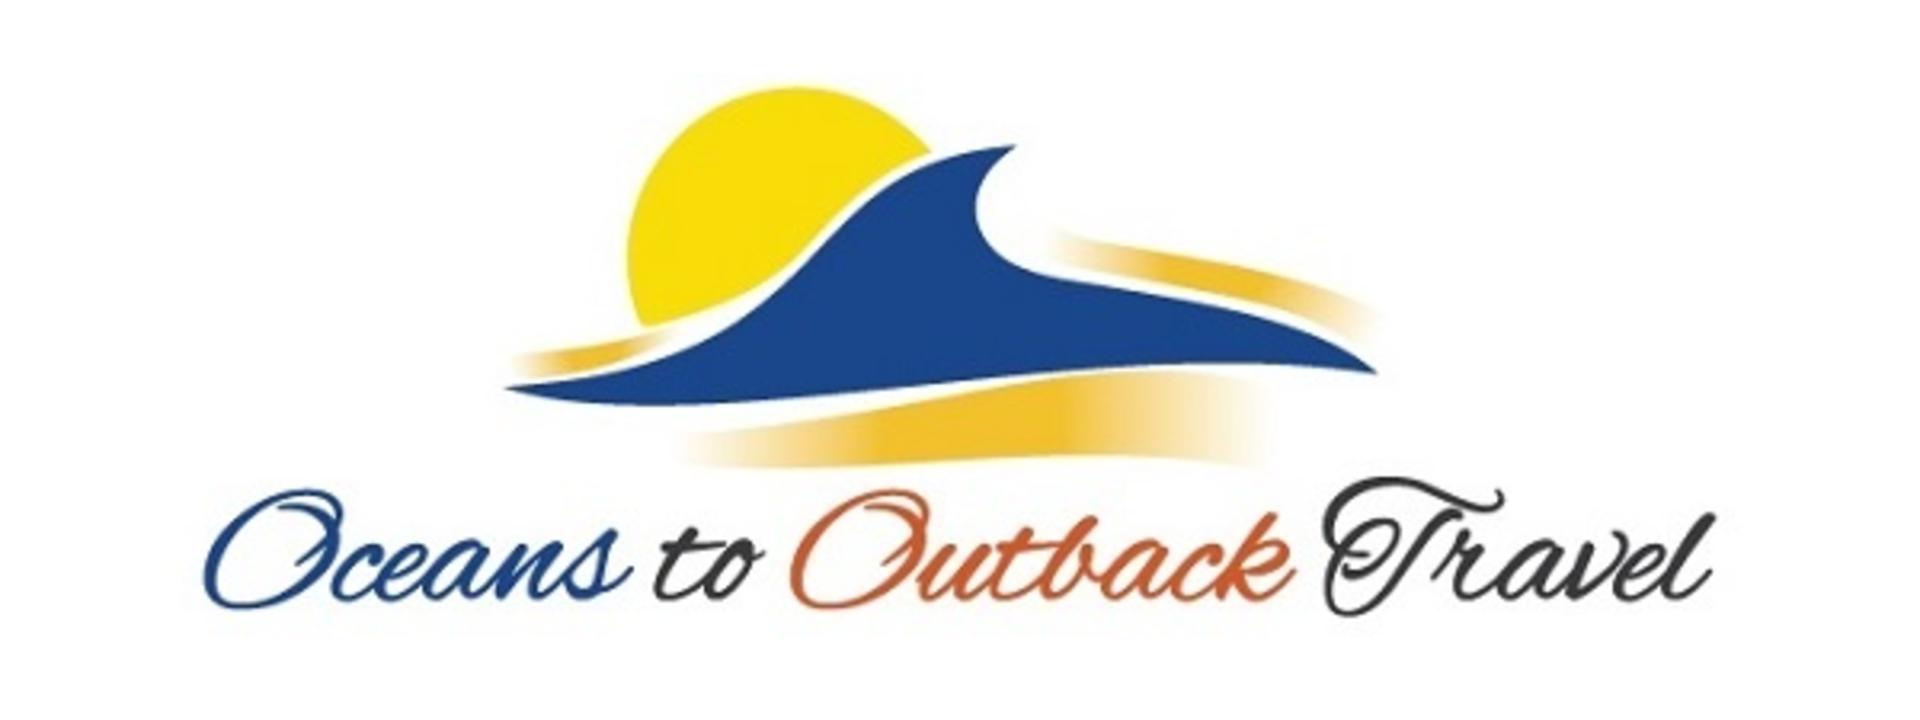 Logo: Oceans to Outback Travel LLC